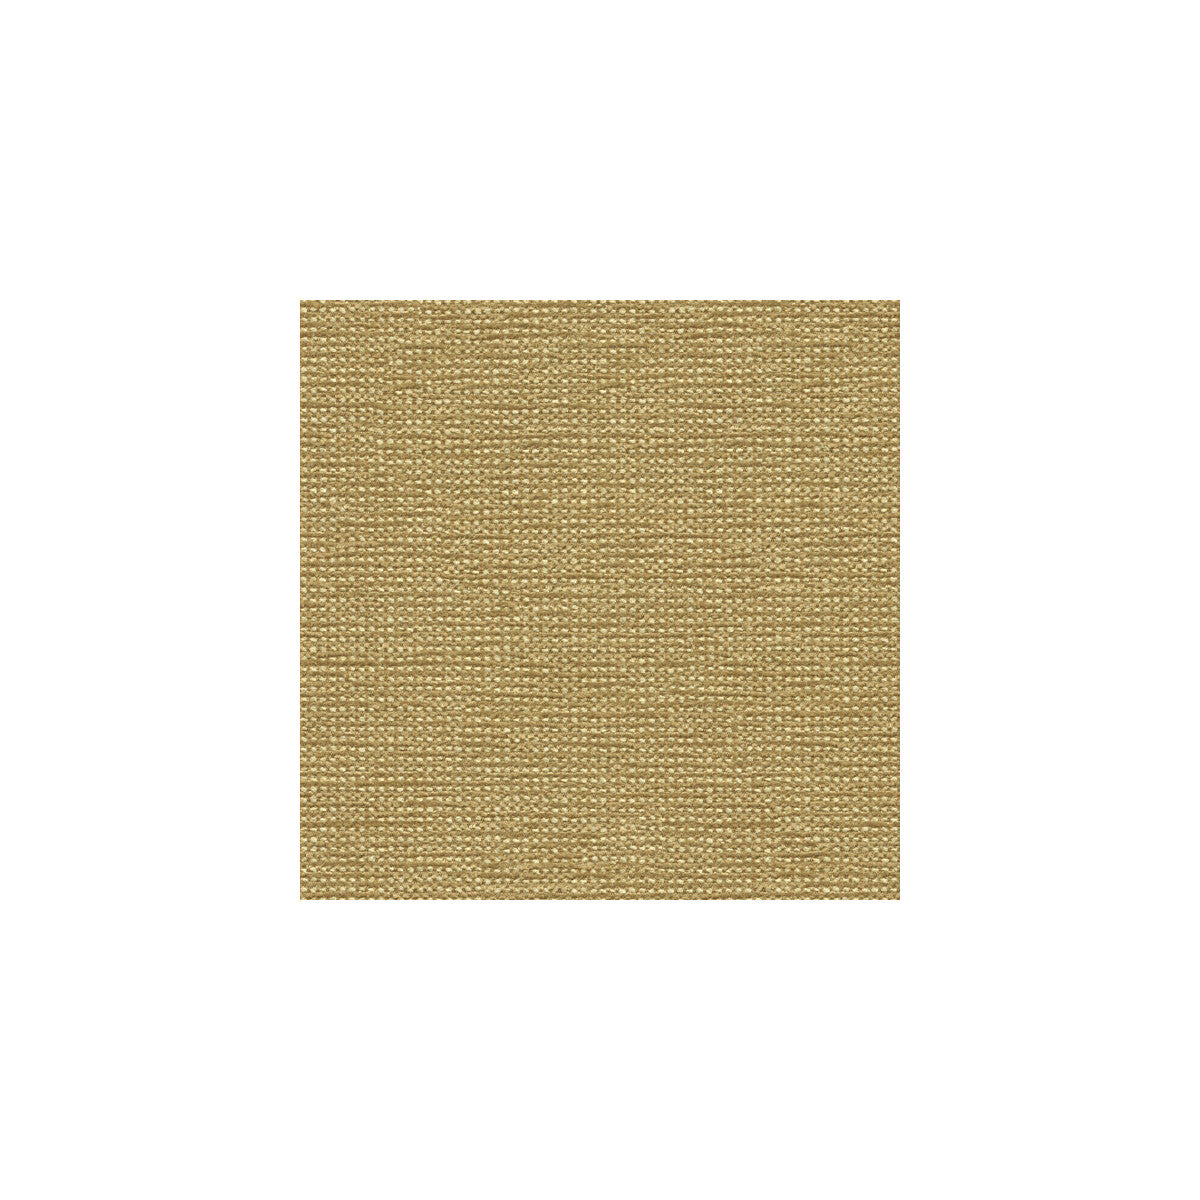 Kravet Smart fabric in 32980-16 color - pattern 32980.16.0 - by Kravet Smart